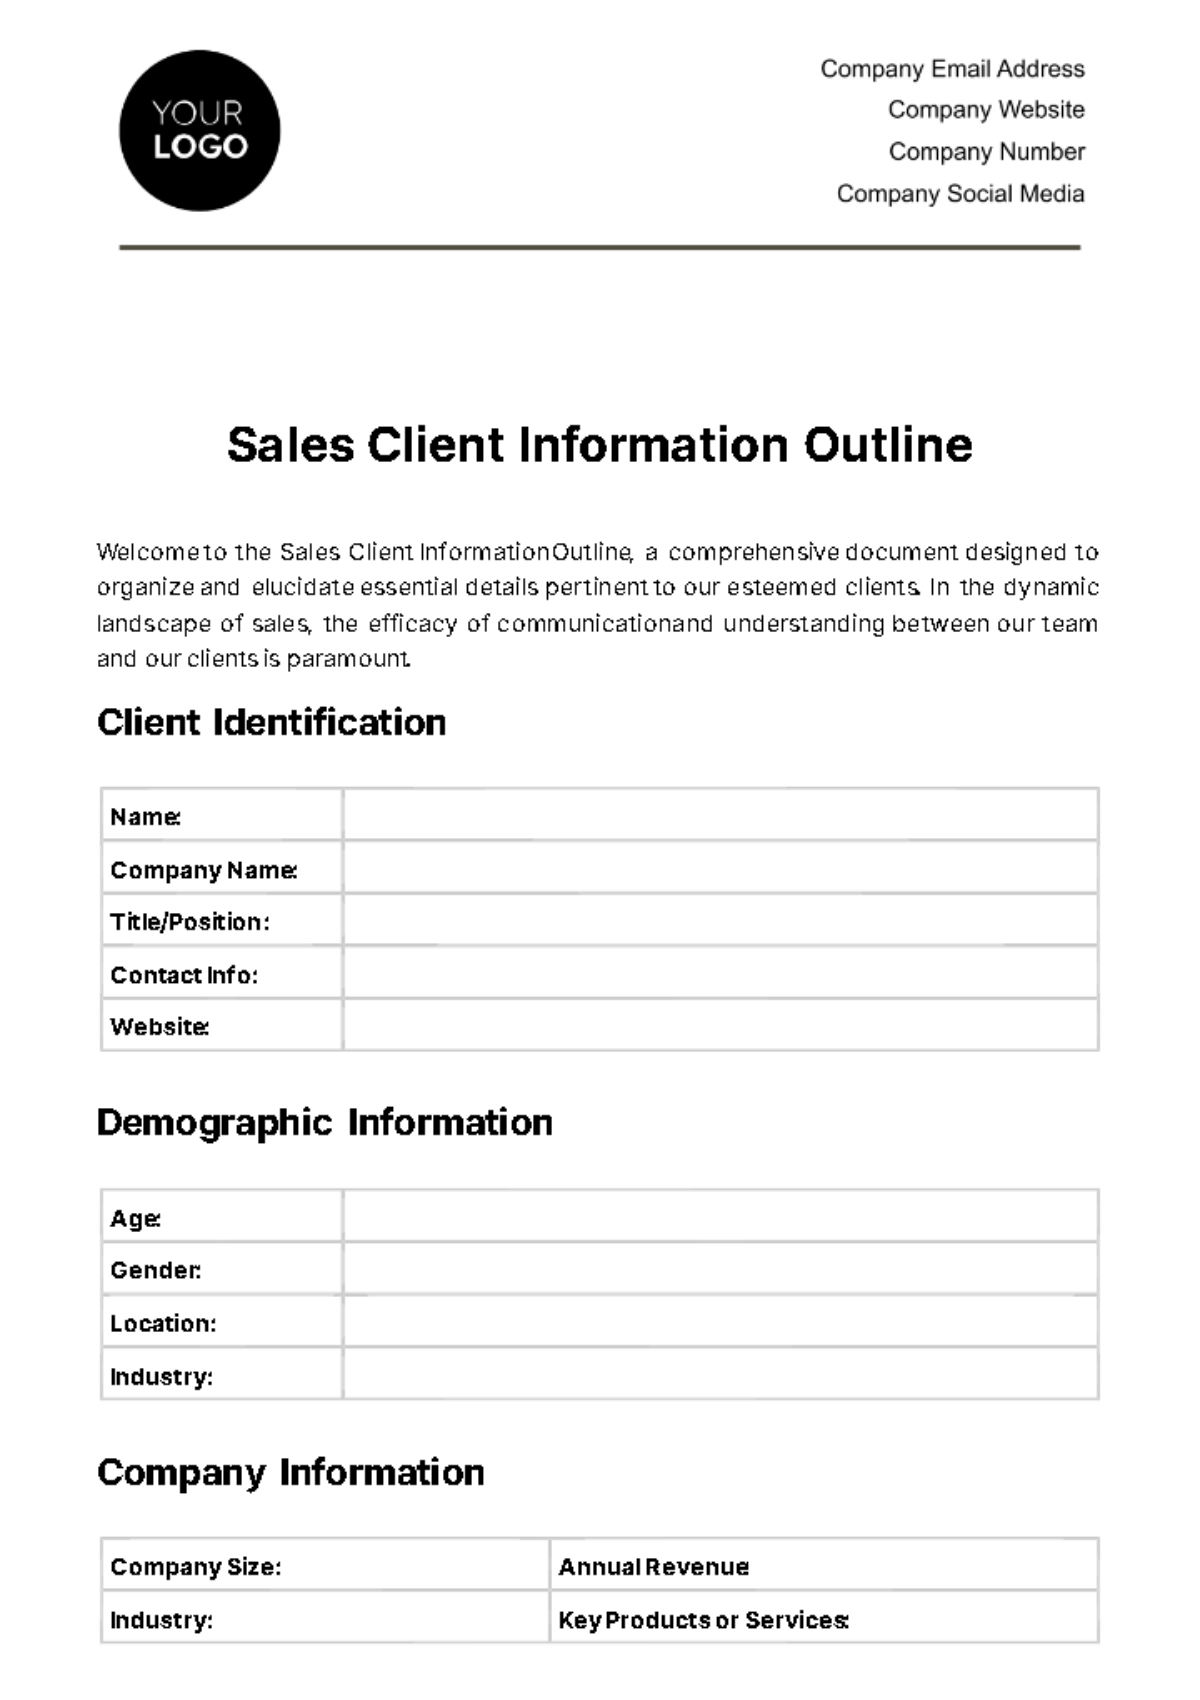 Sales Client Information Outline Template